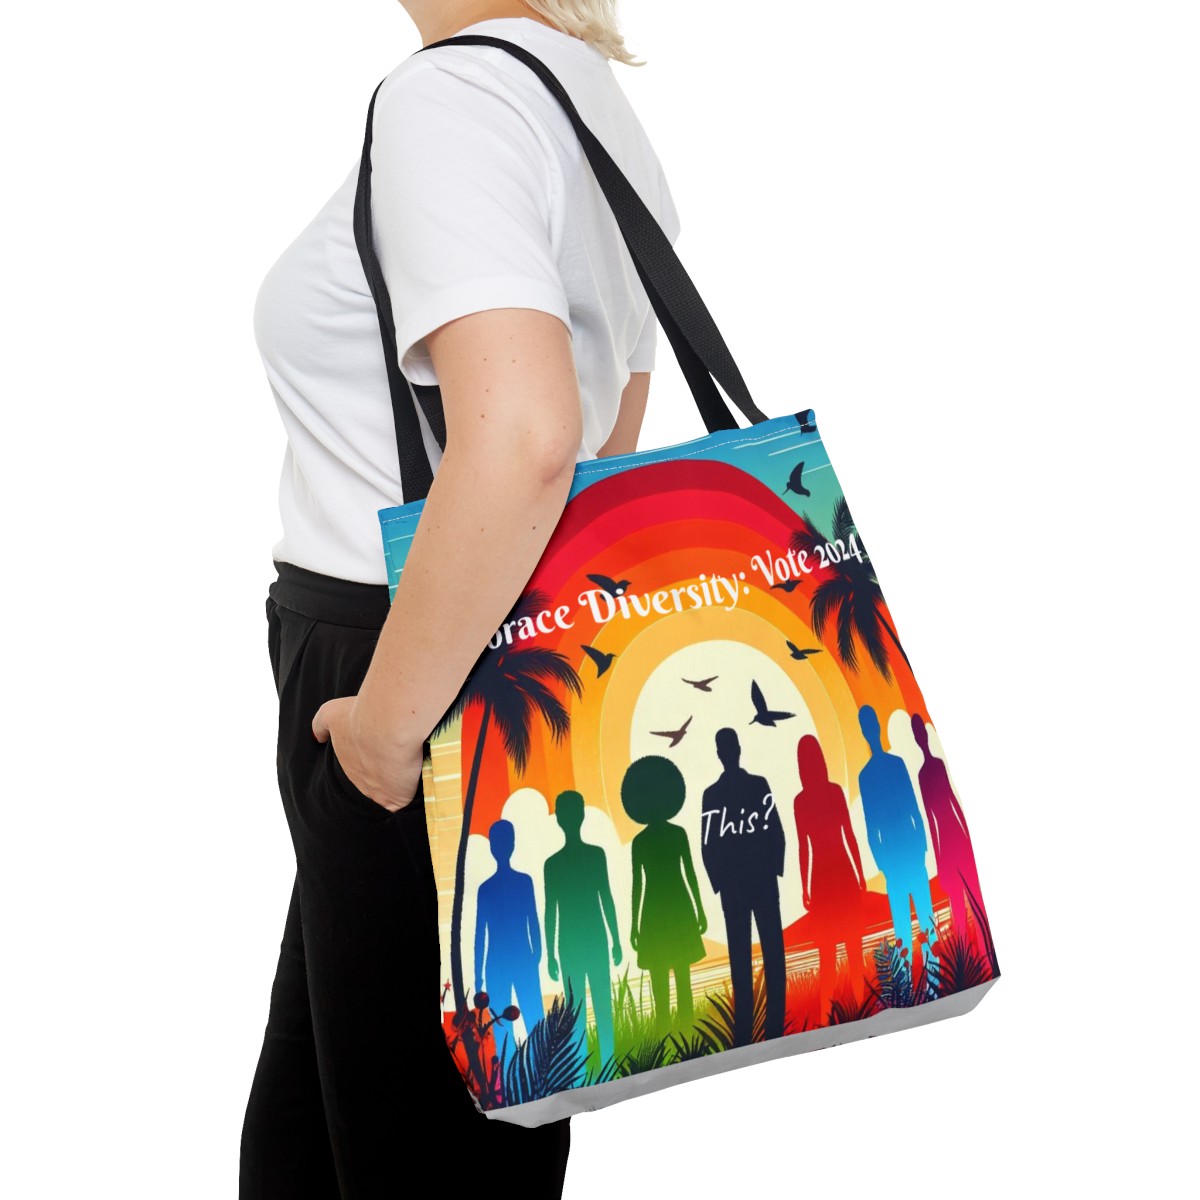 Embrace Diversity, Vote 2024 - Tote Bag product thumbnail image